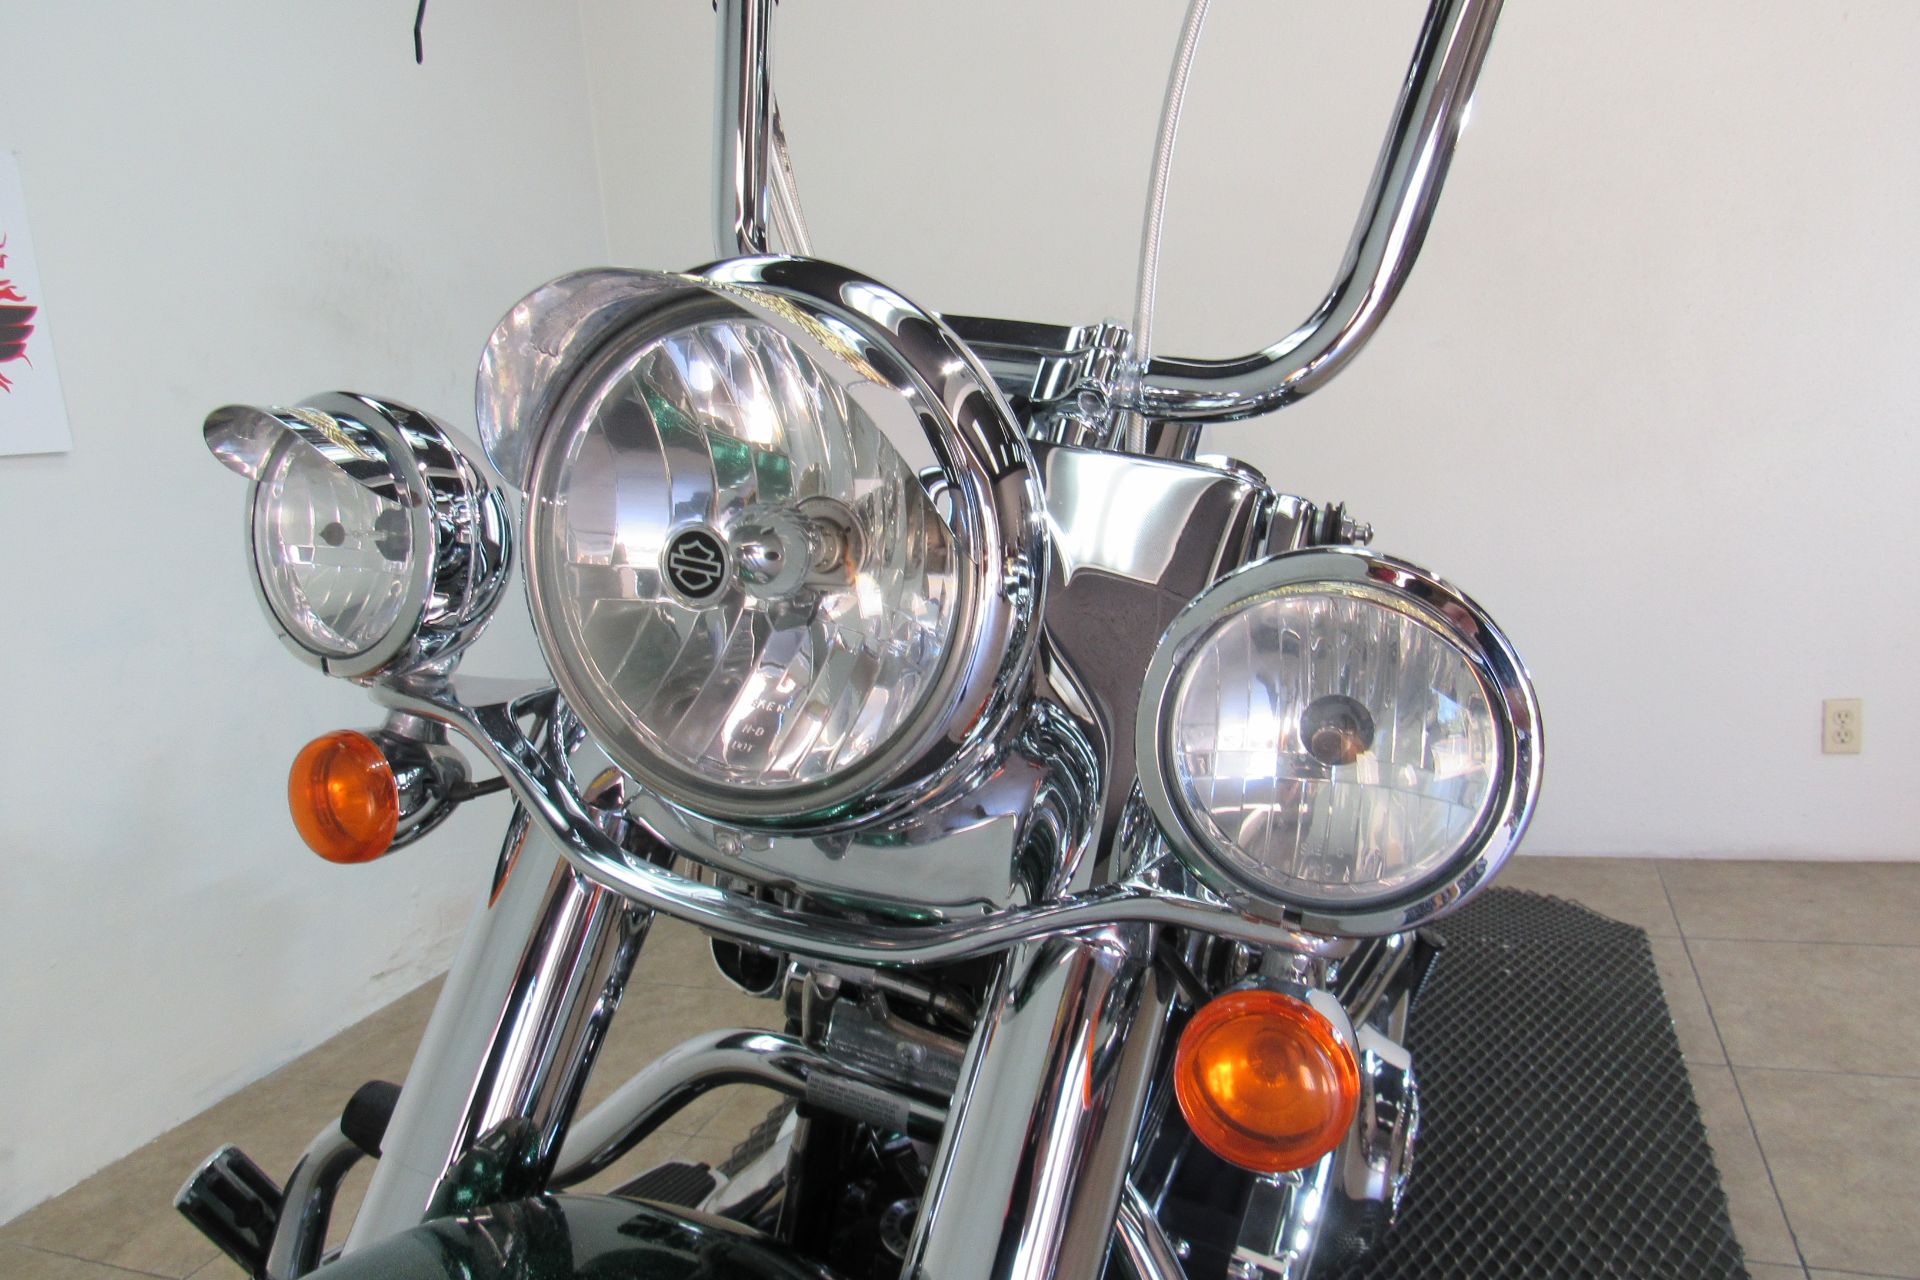 2013 Harley-Davidson Softail® Deluxe in Temecula, California - Photo 36